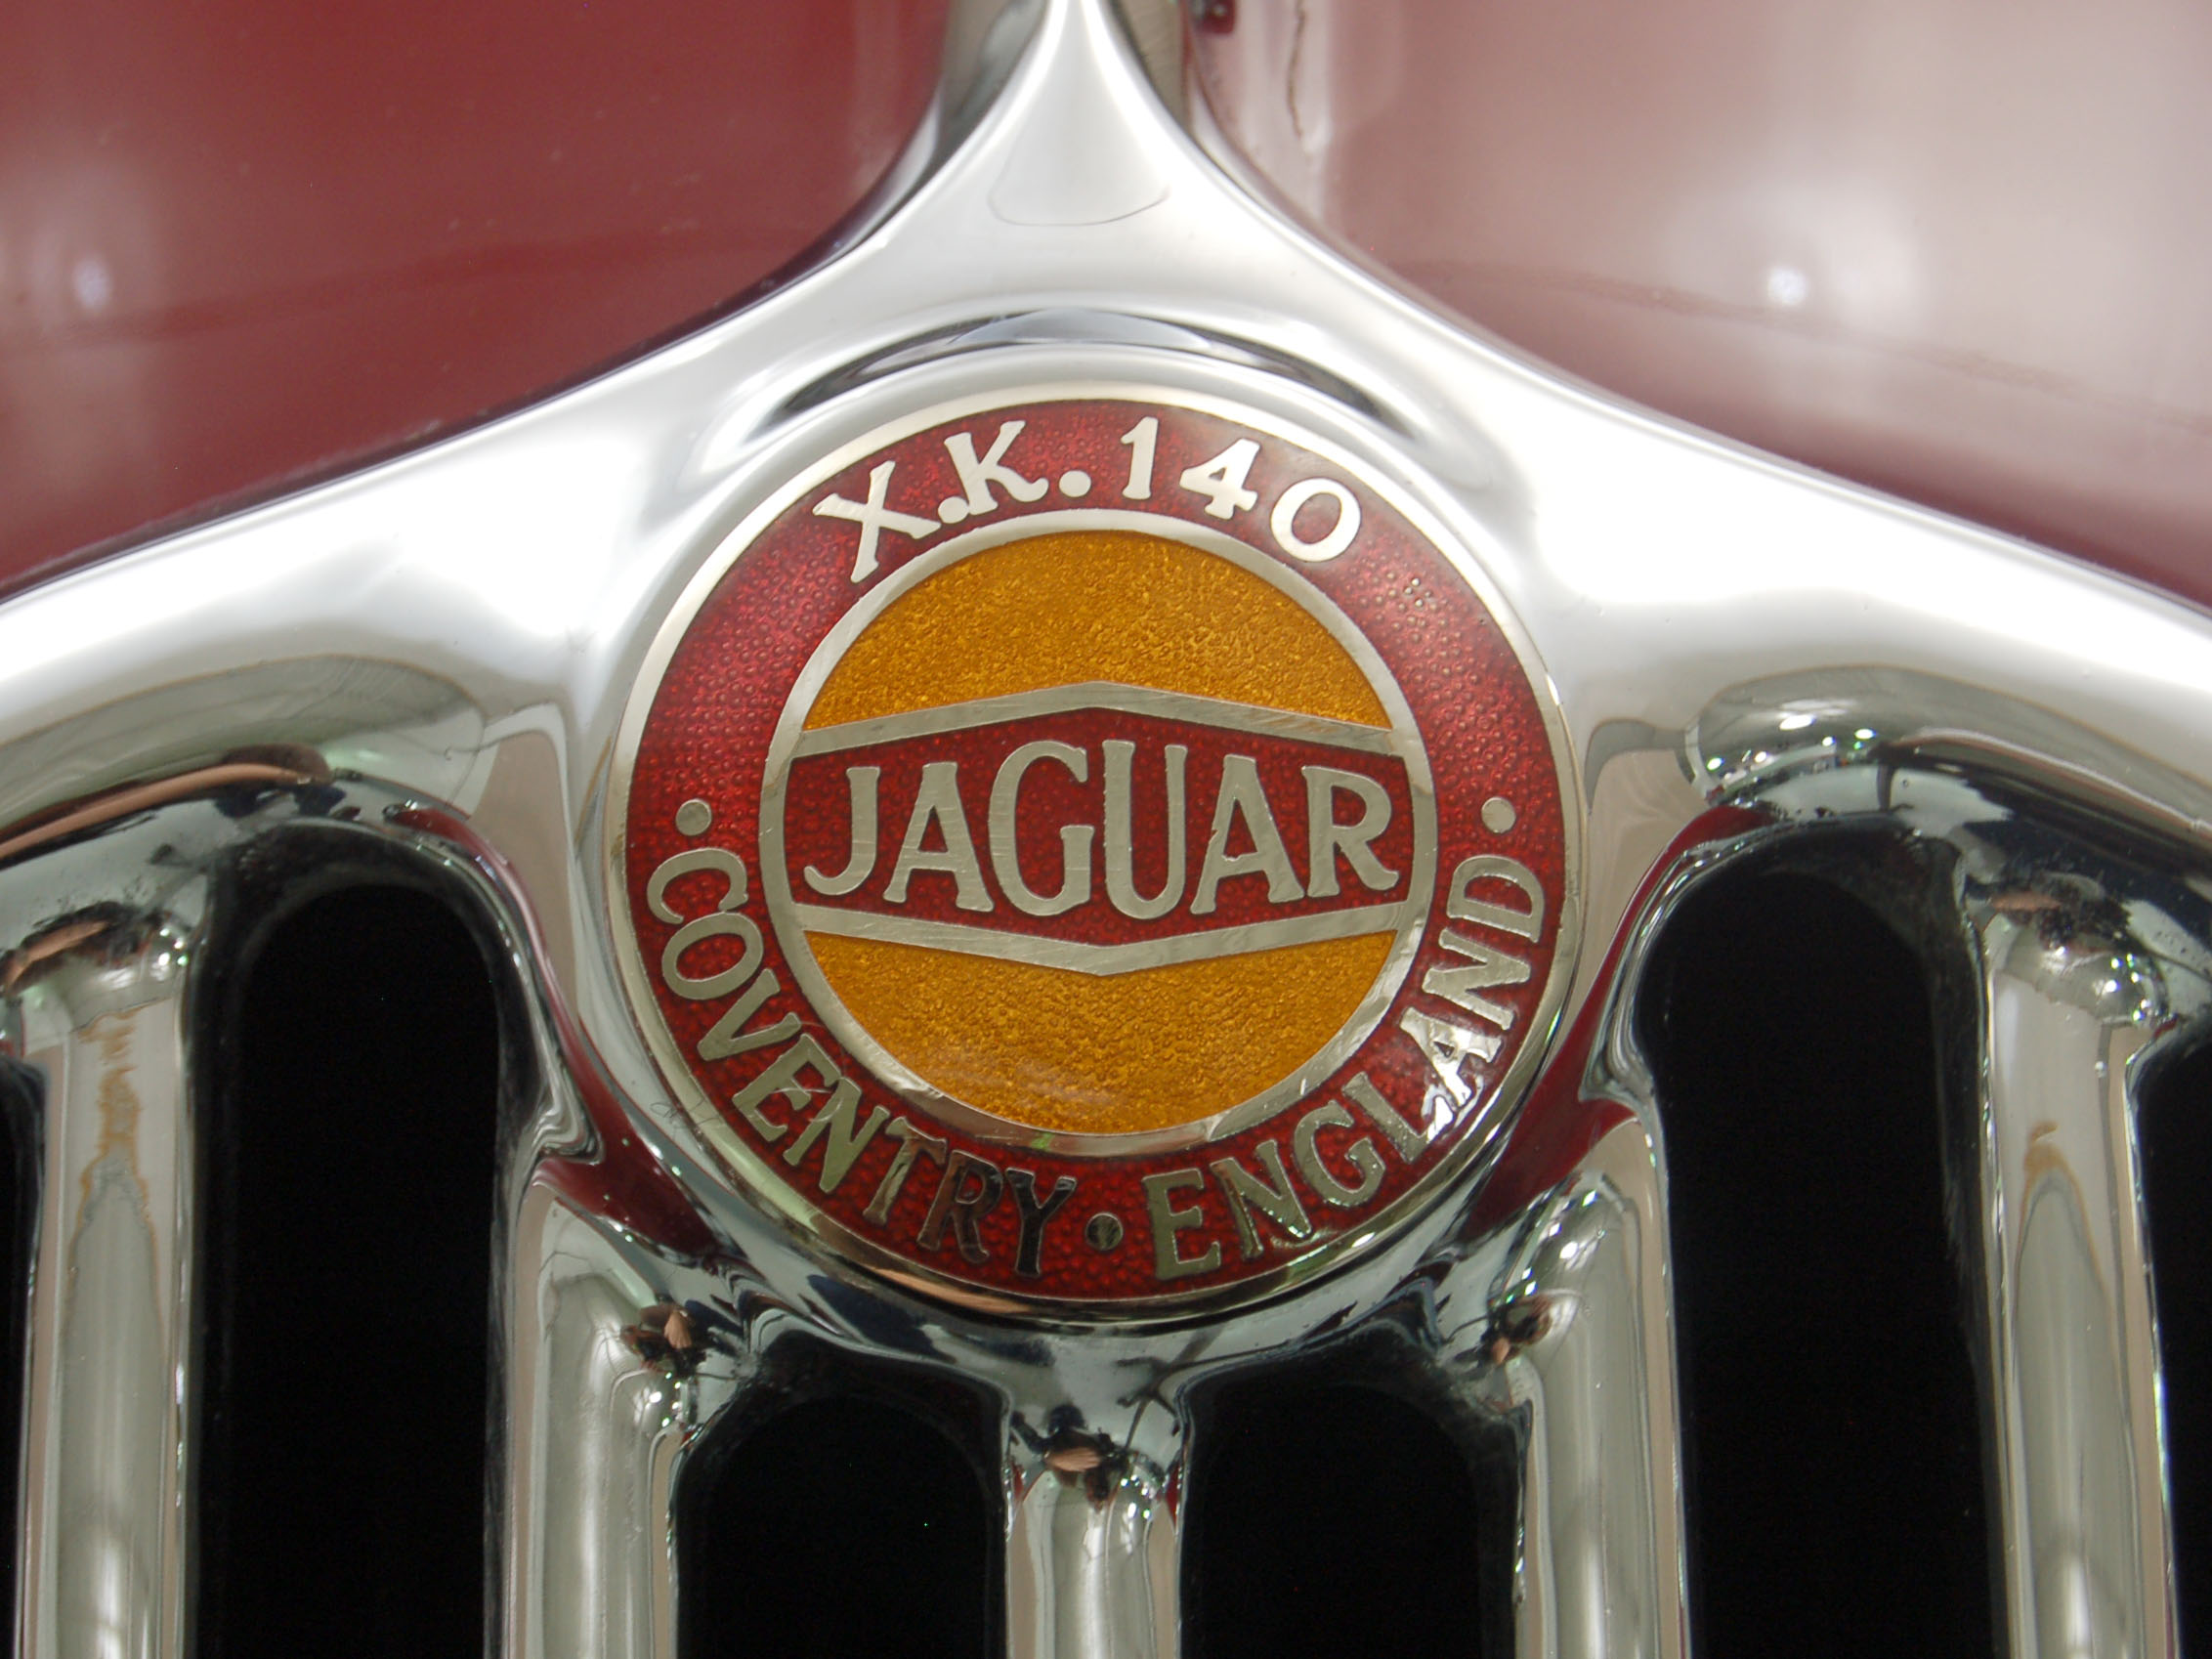 1955 jaguar xk 140 mc